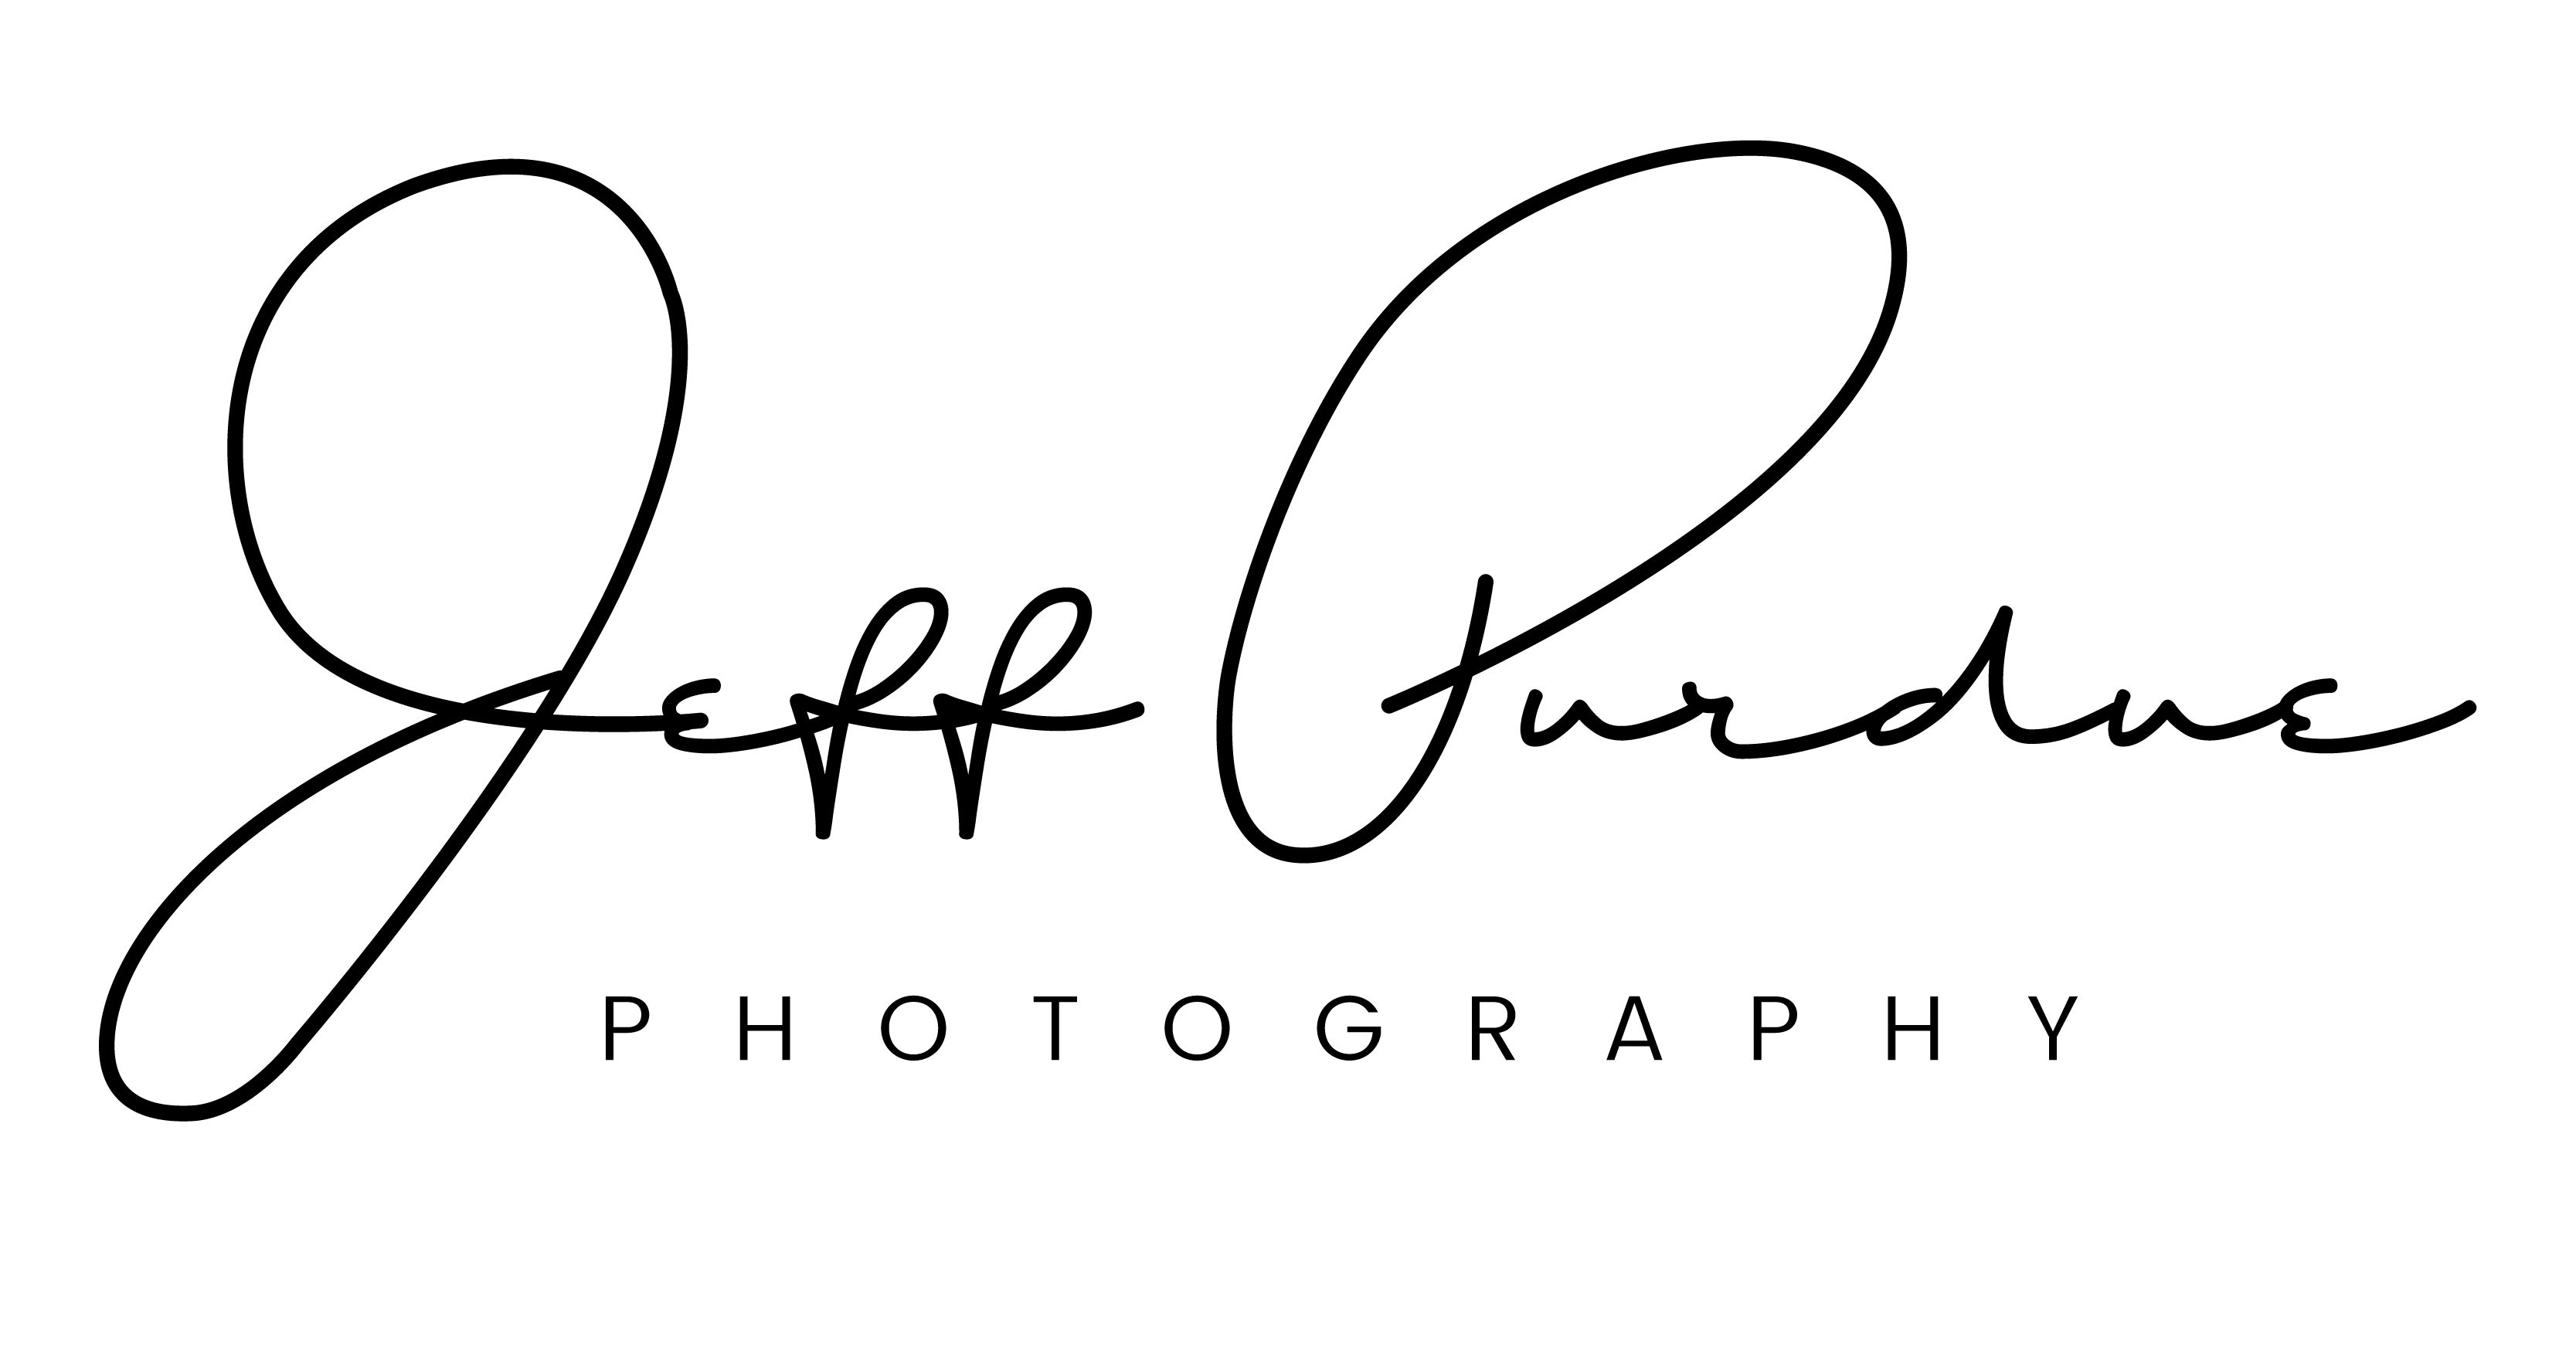 Jeff Purdue Photography